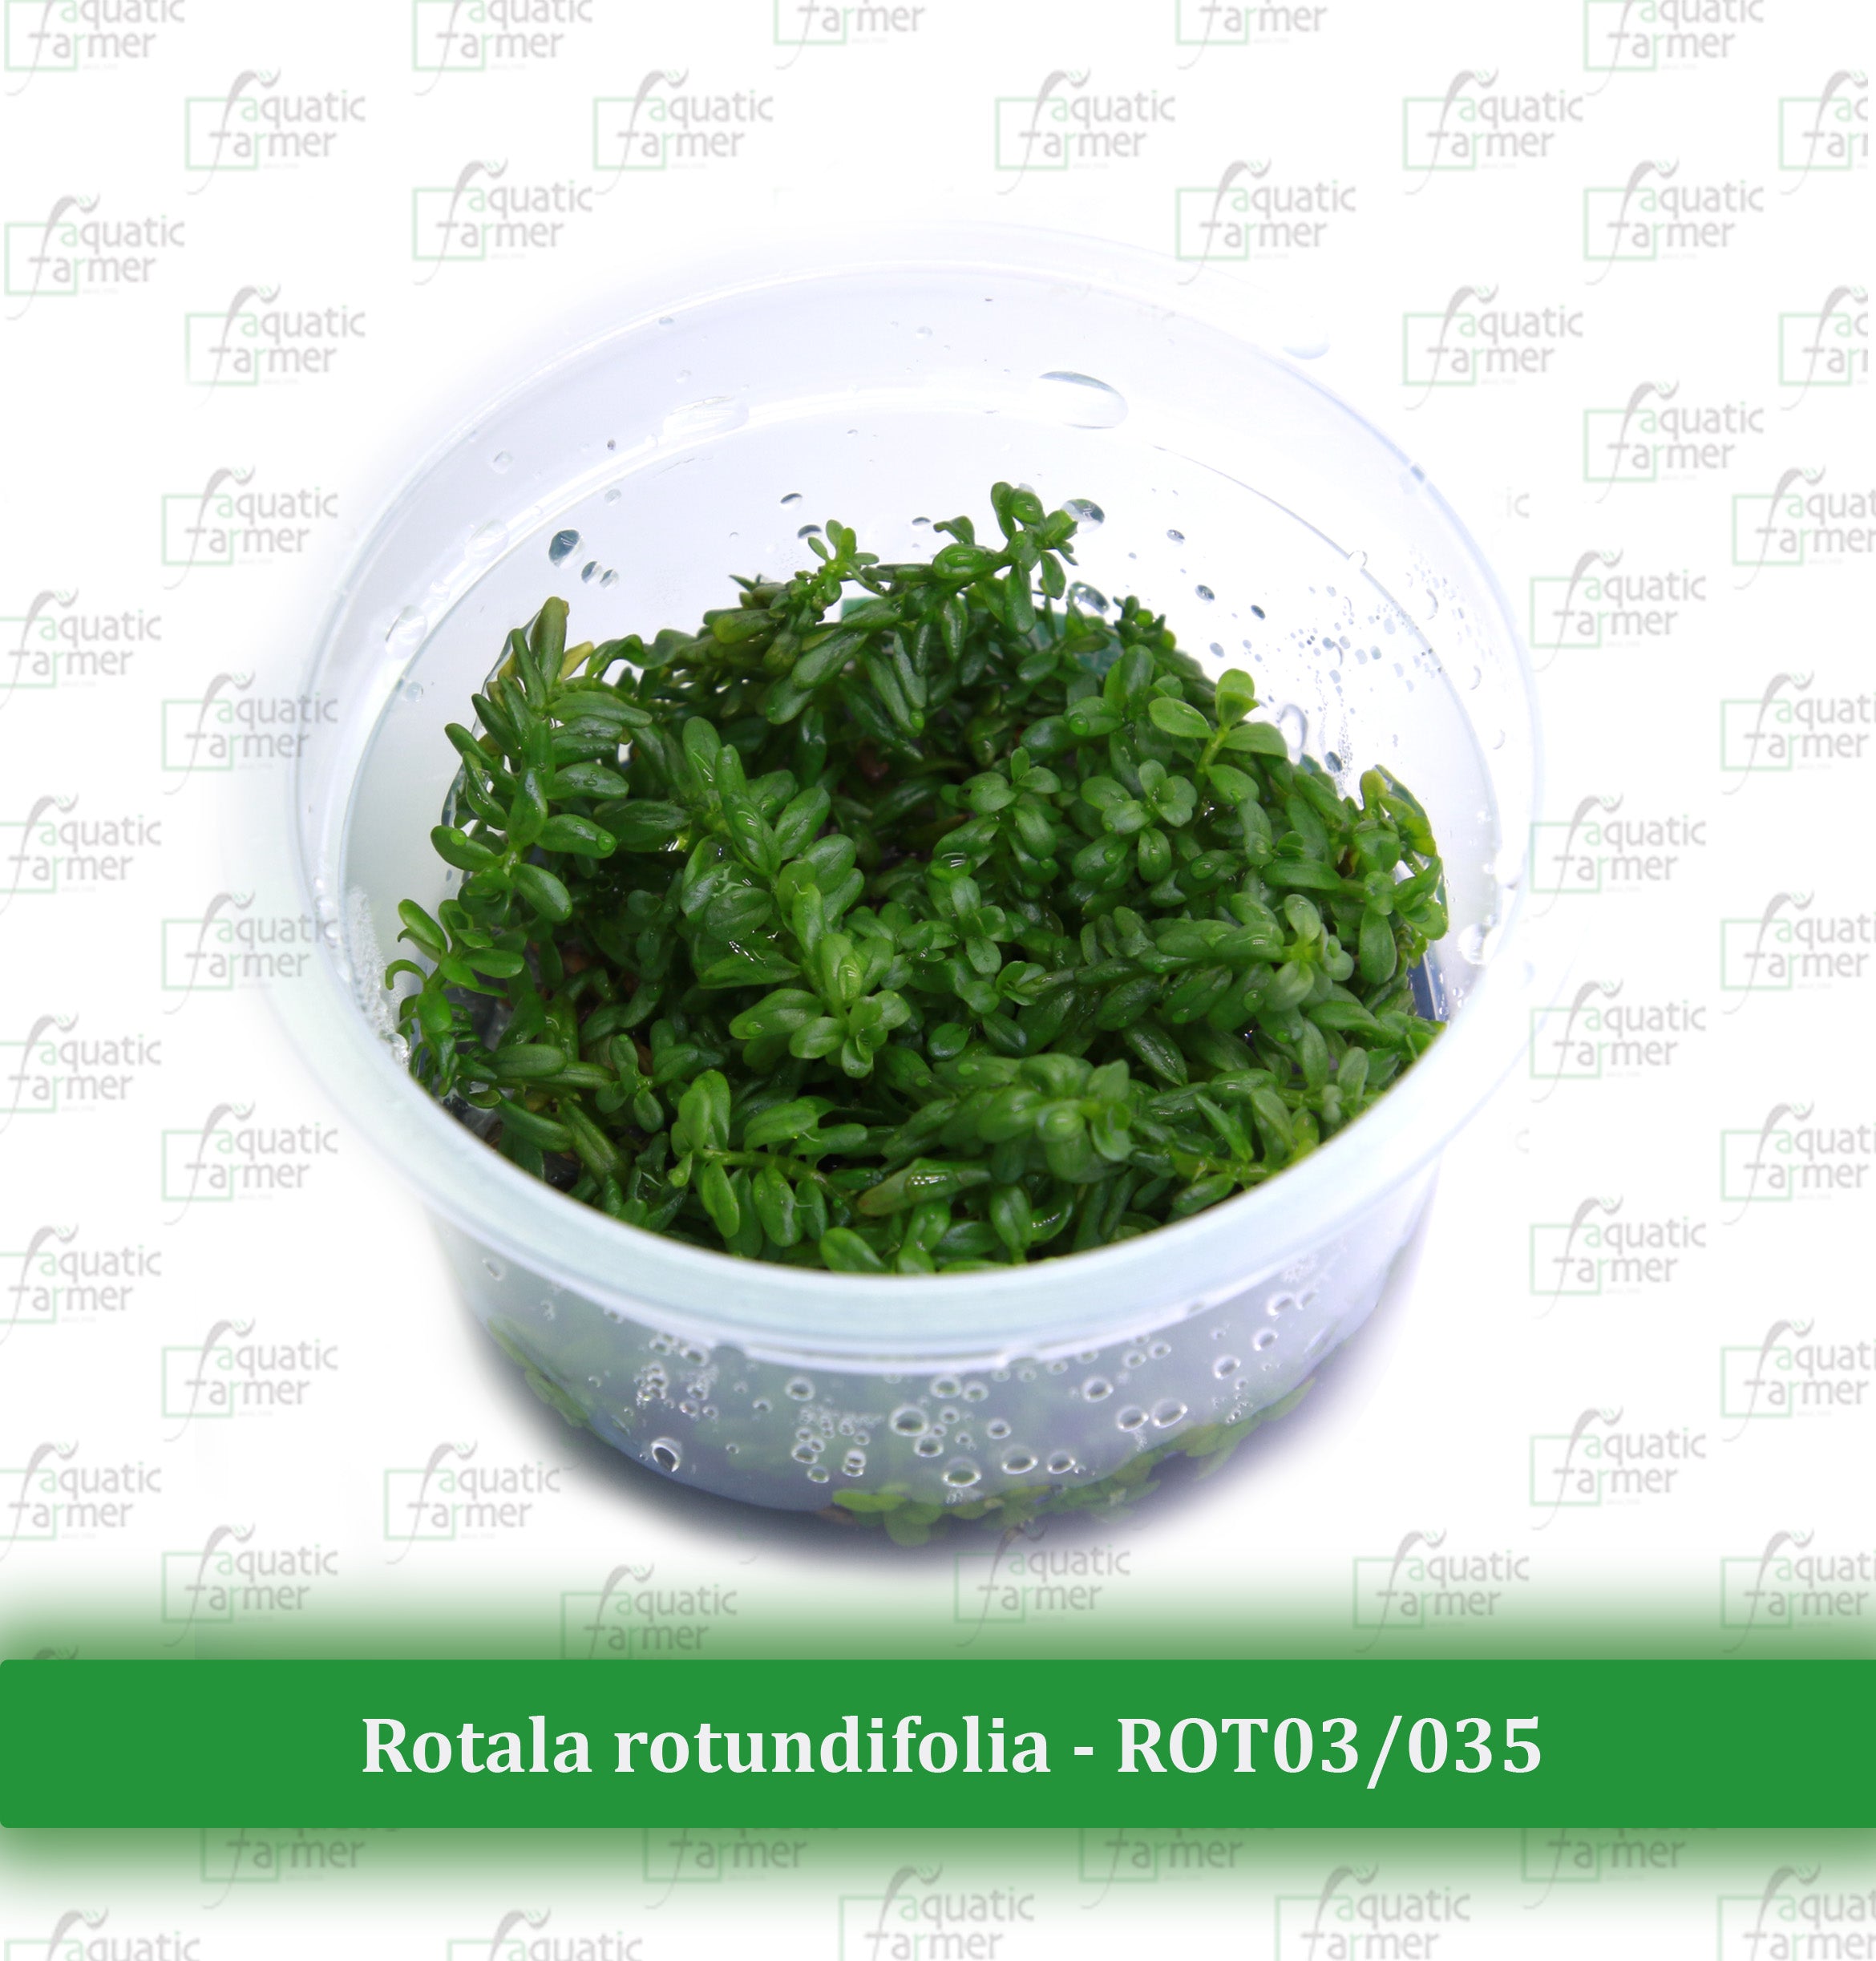 Aquatic Farmer - Rotala Rotundifolia 'Green'